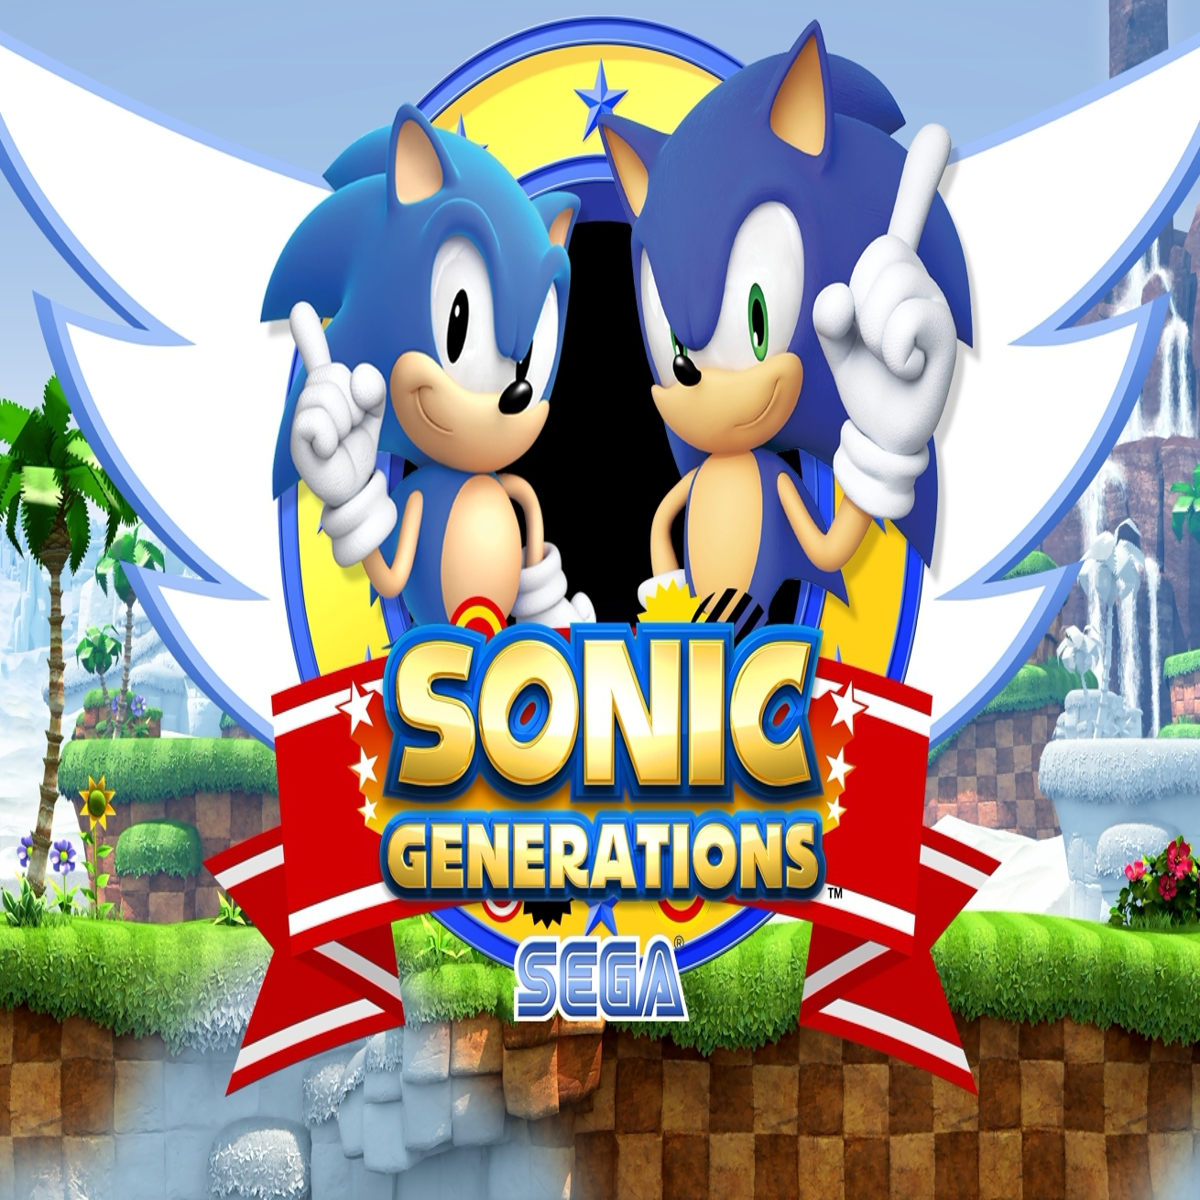 Sonic Unleashed - Jogo Digital Ps3